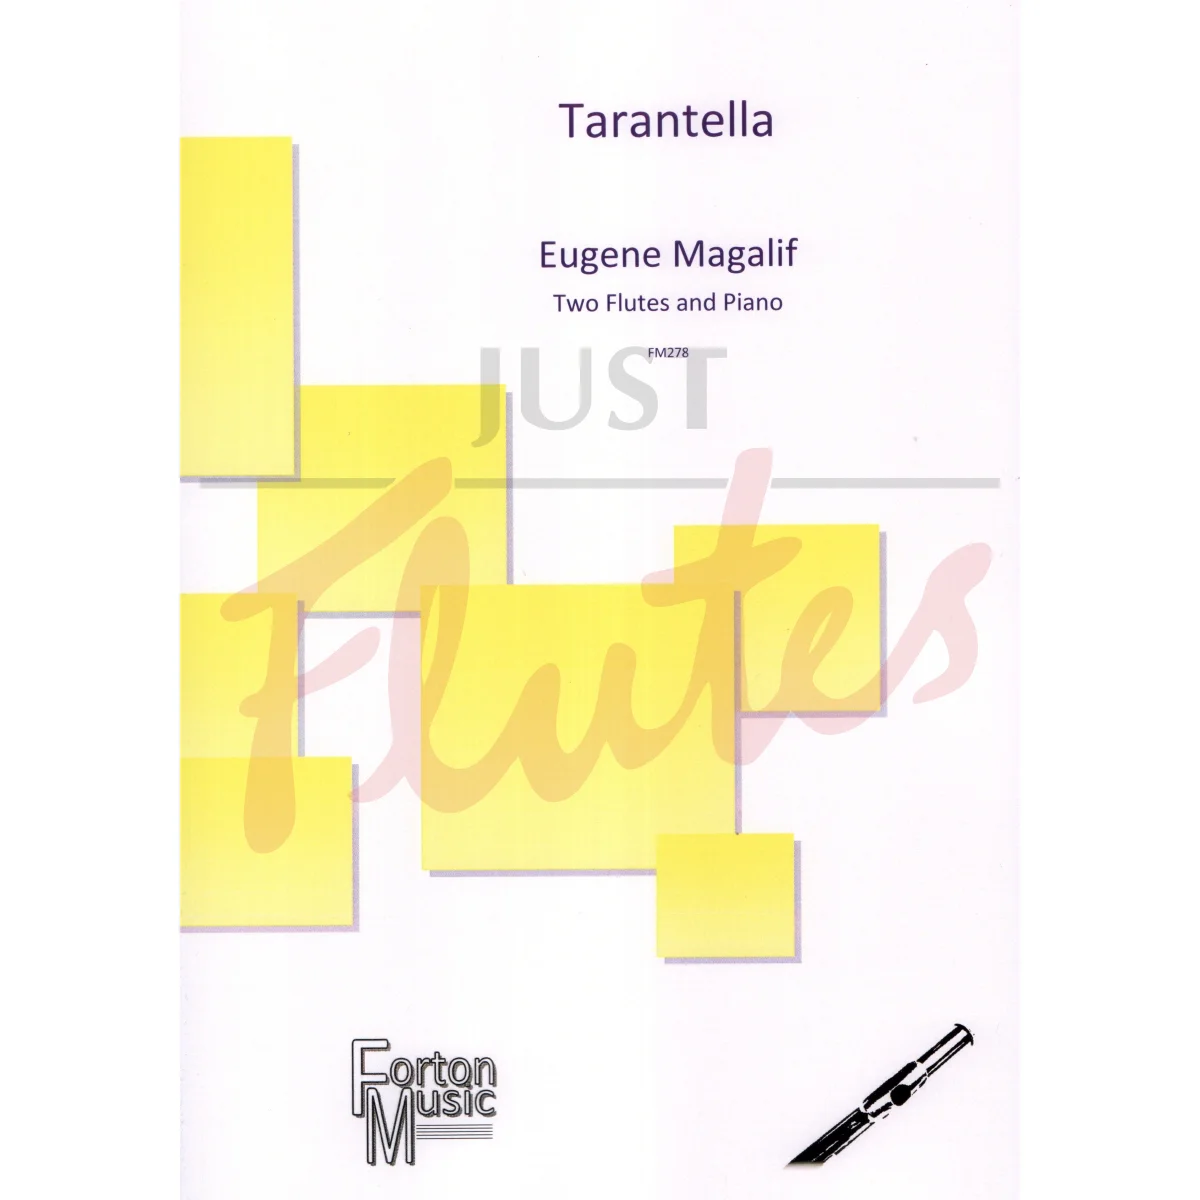 Tarantella for Two Flutes and Piano